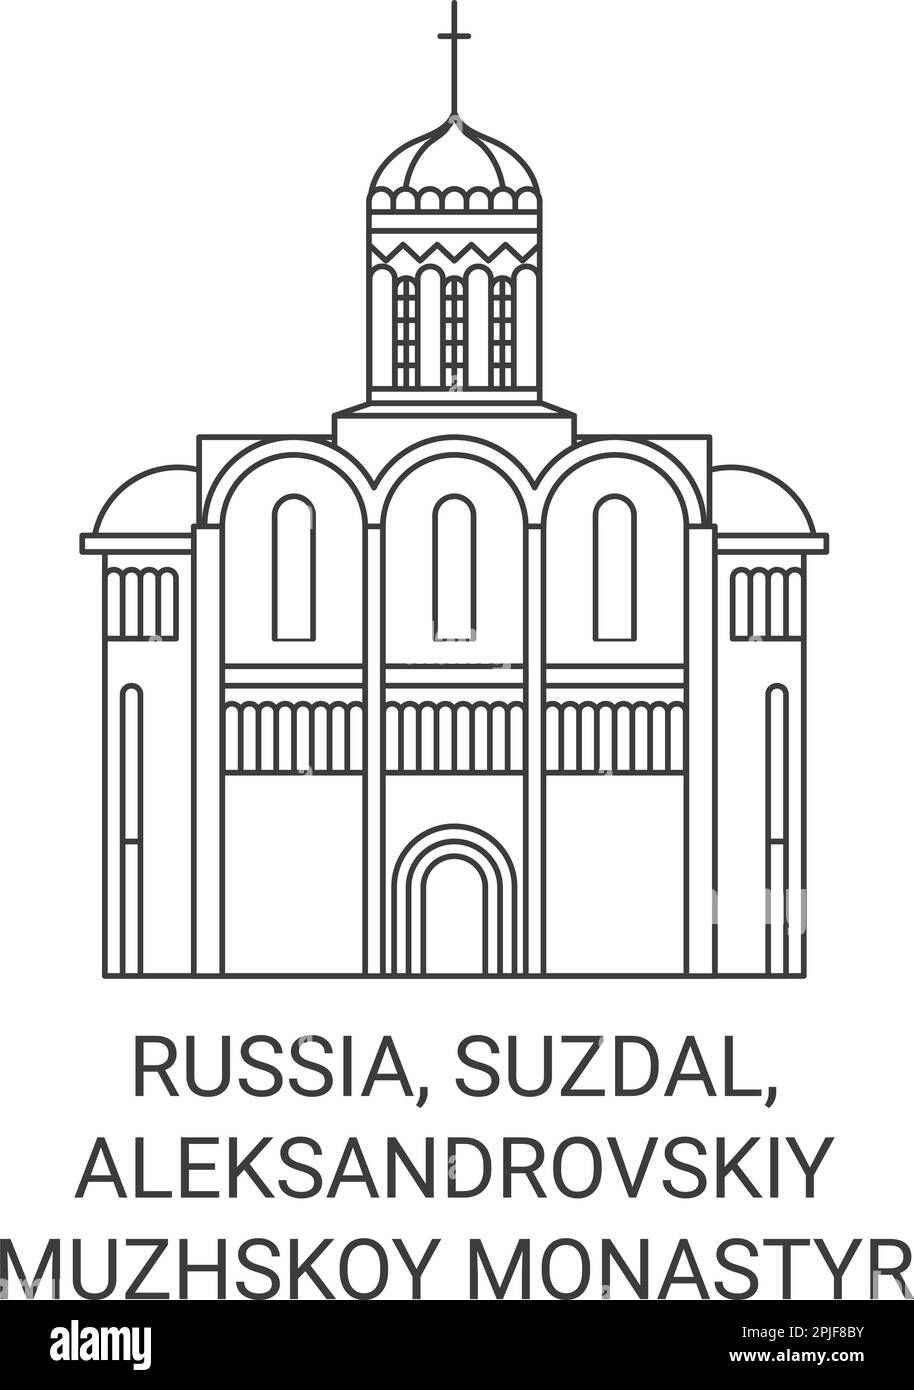 Russia, Suzdal, Aleksandrovskiy Muzhskoy Monastyr travel landmark vector illustration Stock Vector